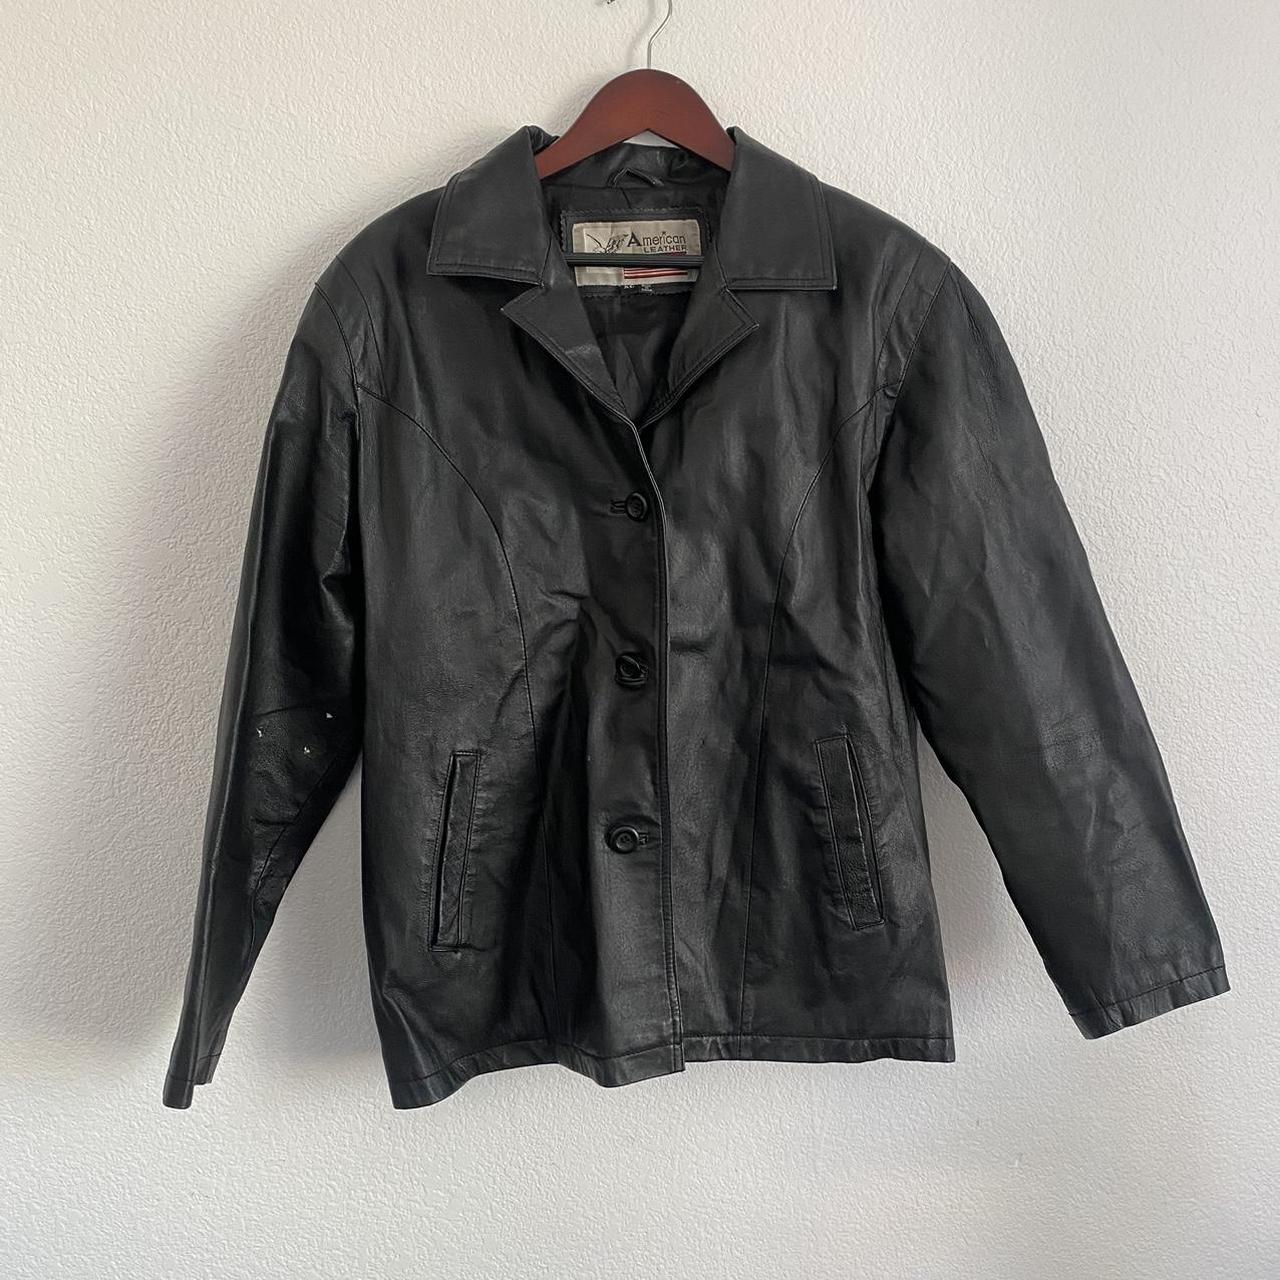 Womens leather jacket size XL #LeatherJacket... - Depop